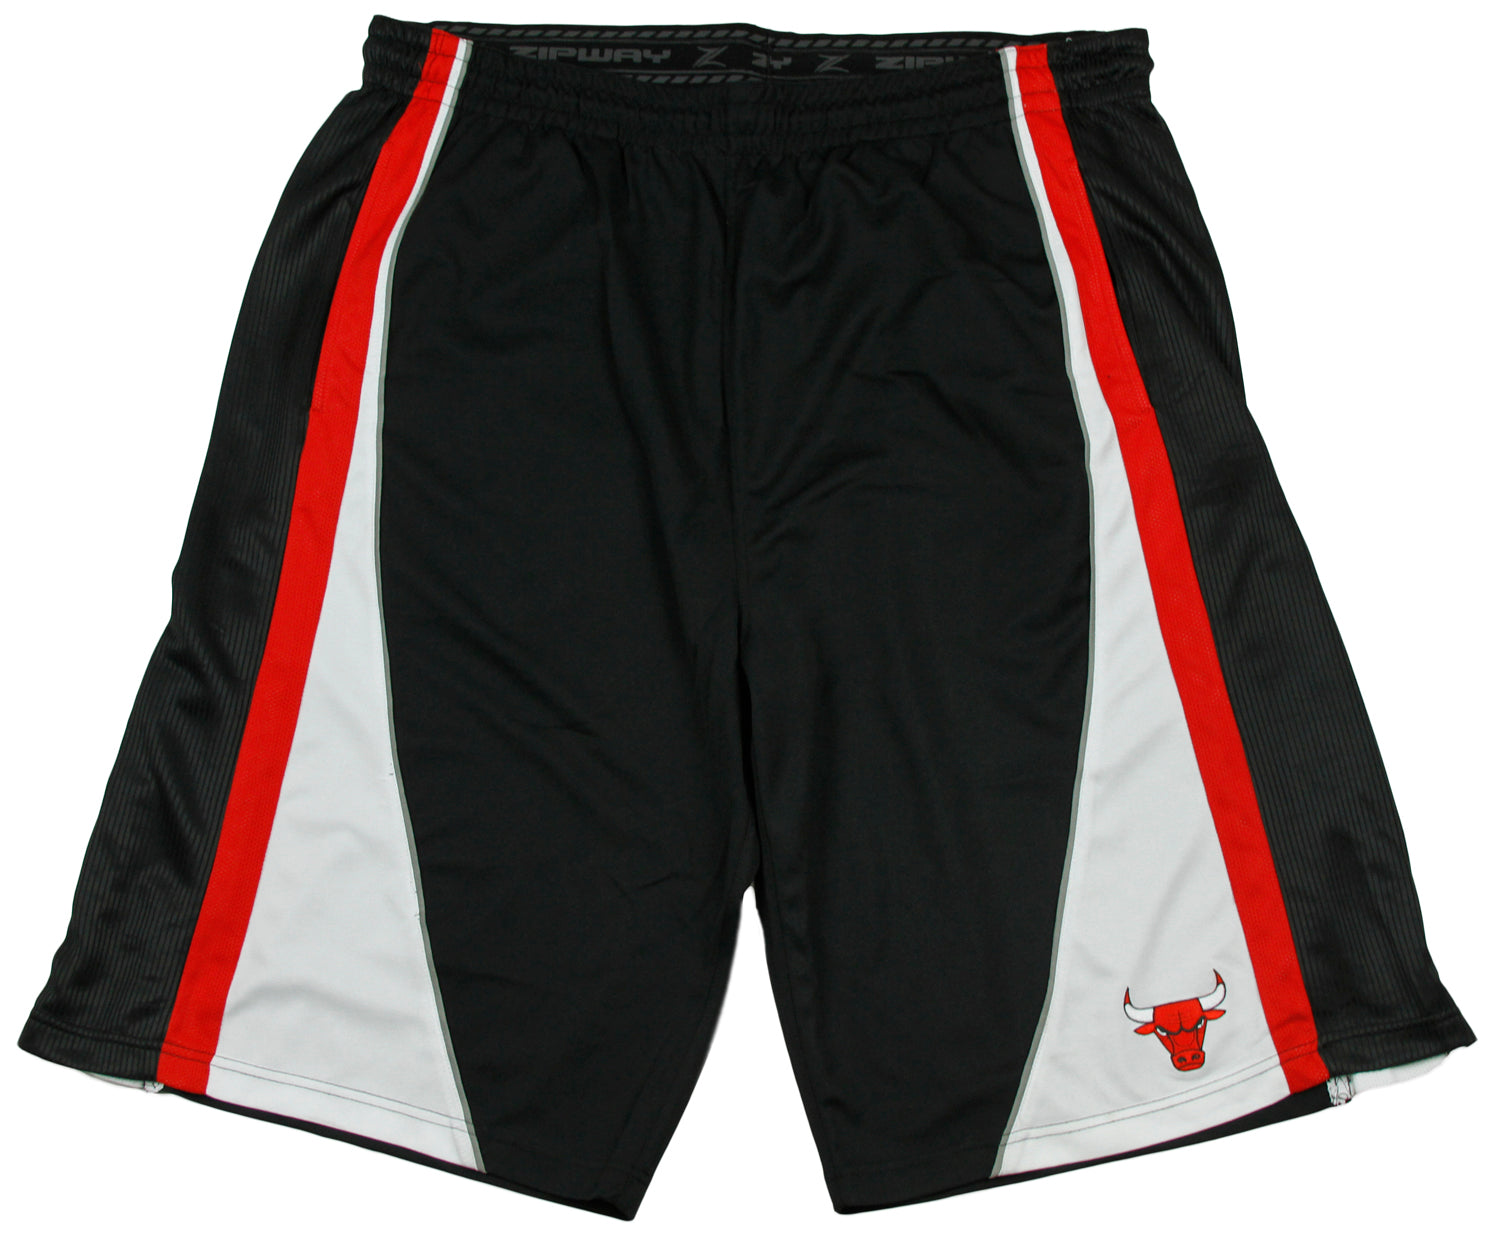 Zipway Chicago Bulls NBA Big & Tall Men's Basketball Shorts - Black